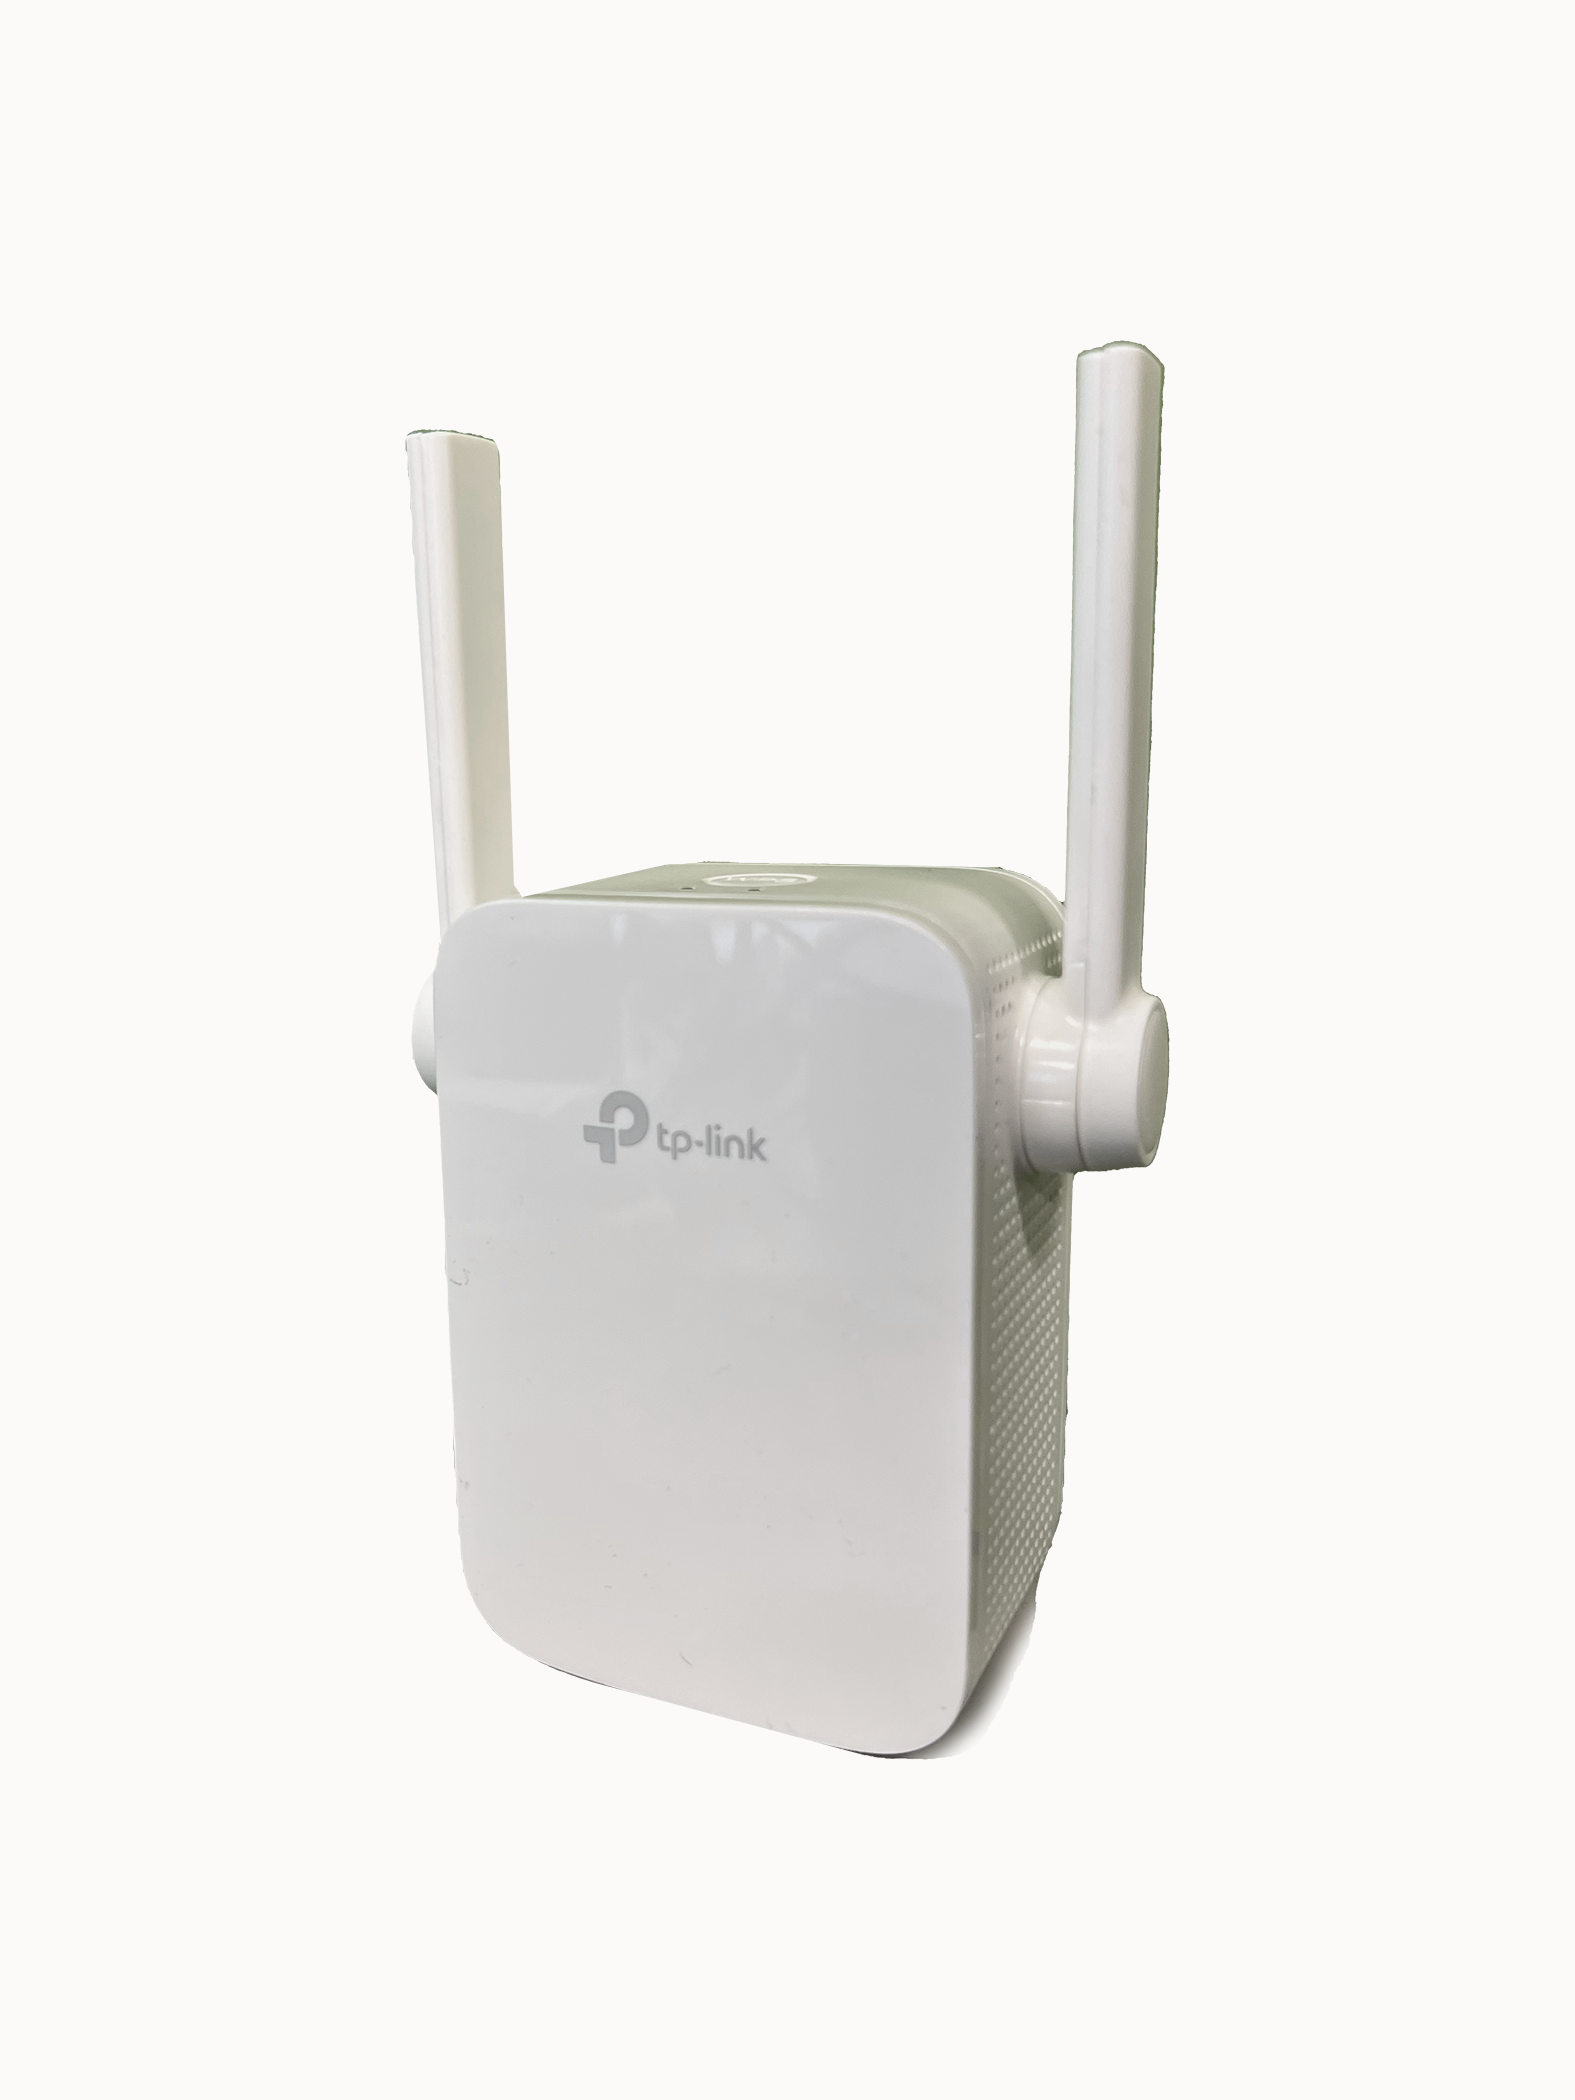 Extensor WiFi TP-Link N300 (RE105), extensores WiFi, amplificador